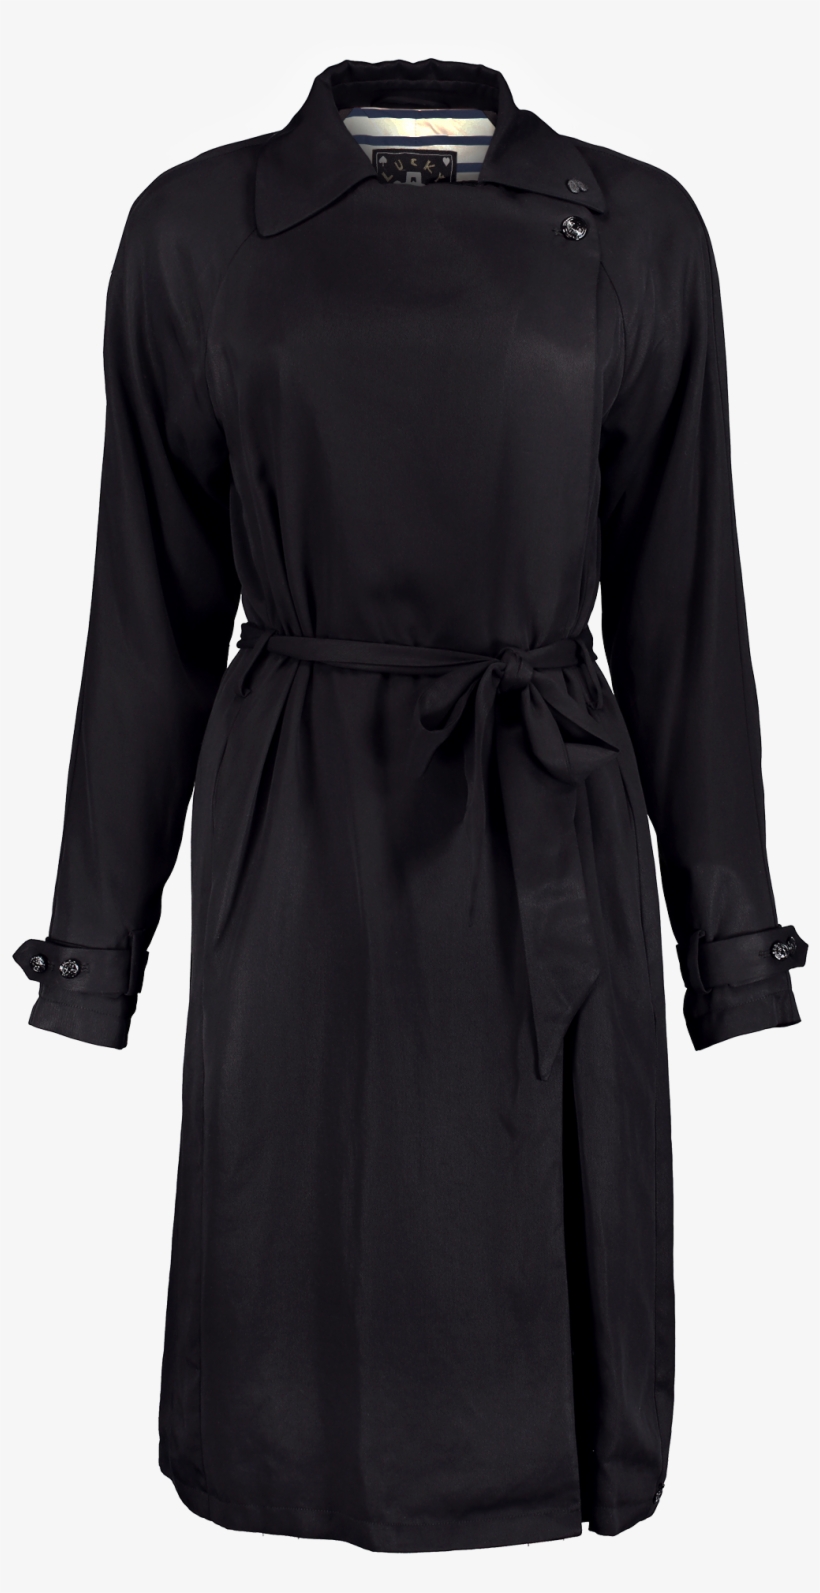 Loose Fit Trench Coat Black - Isabel Marant Molan Dress, transparent png #2811607